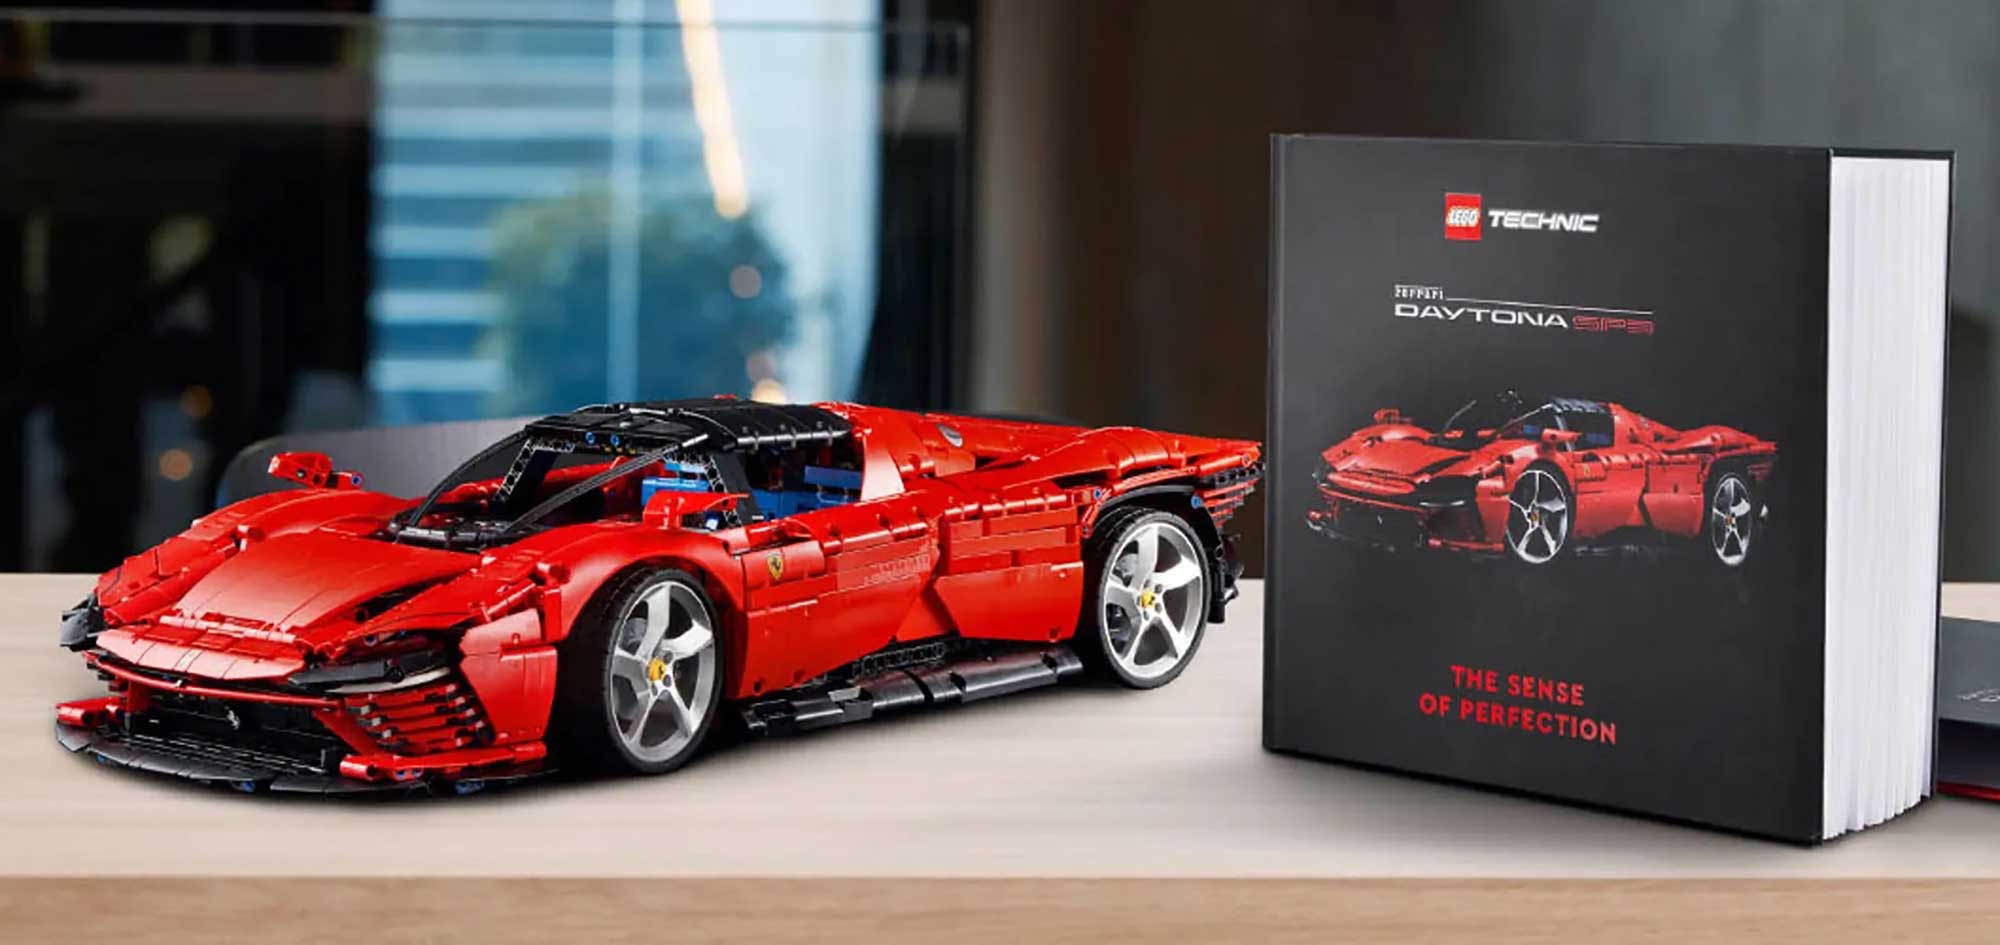 Lego Technic Ferrari Daytona SP3 set officially announced with